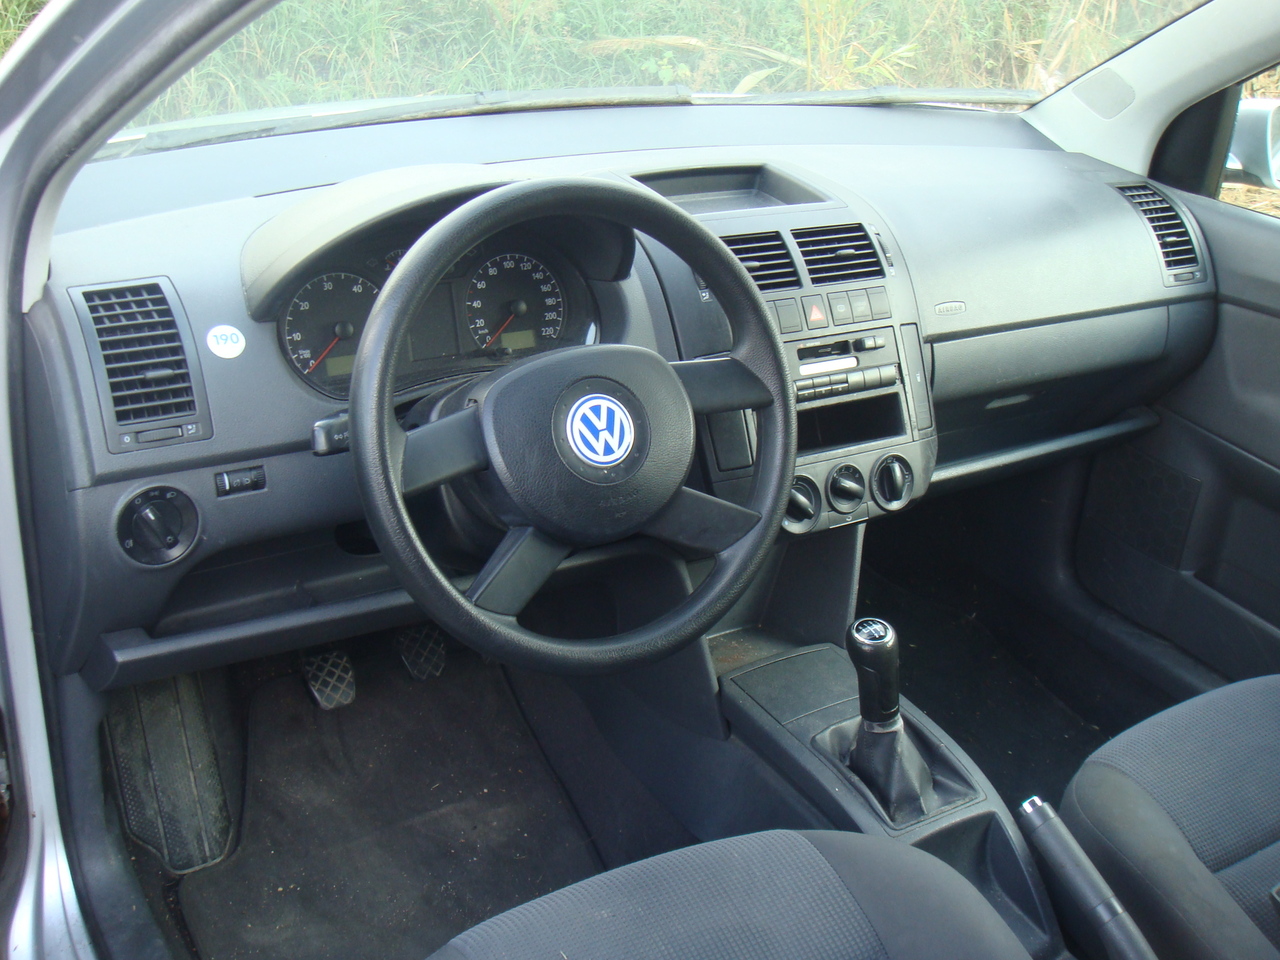 Plansa bord completa cu airbaguri VW Polo 9n 2003 #940540